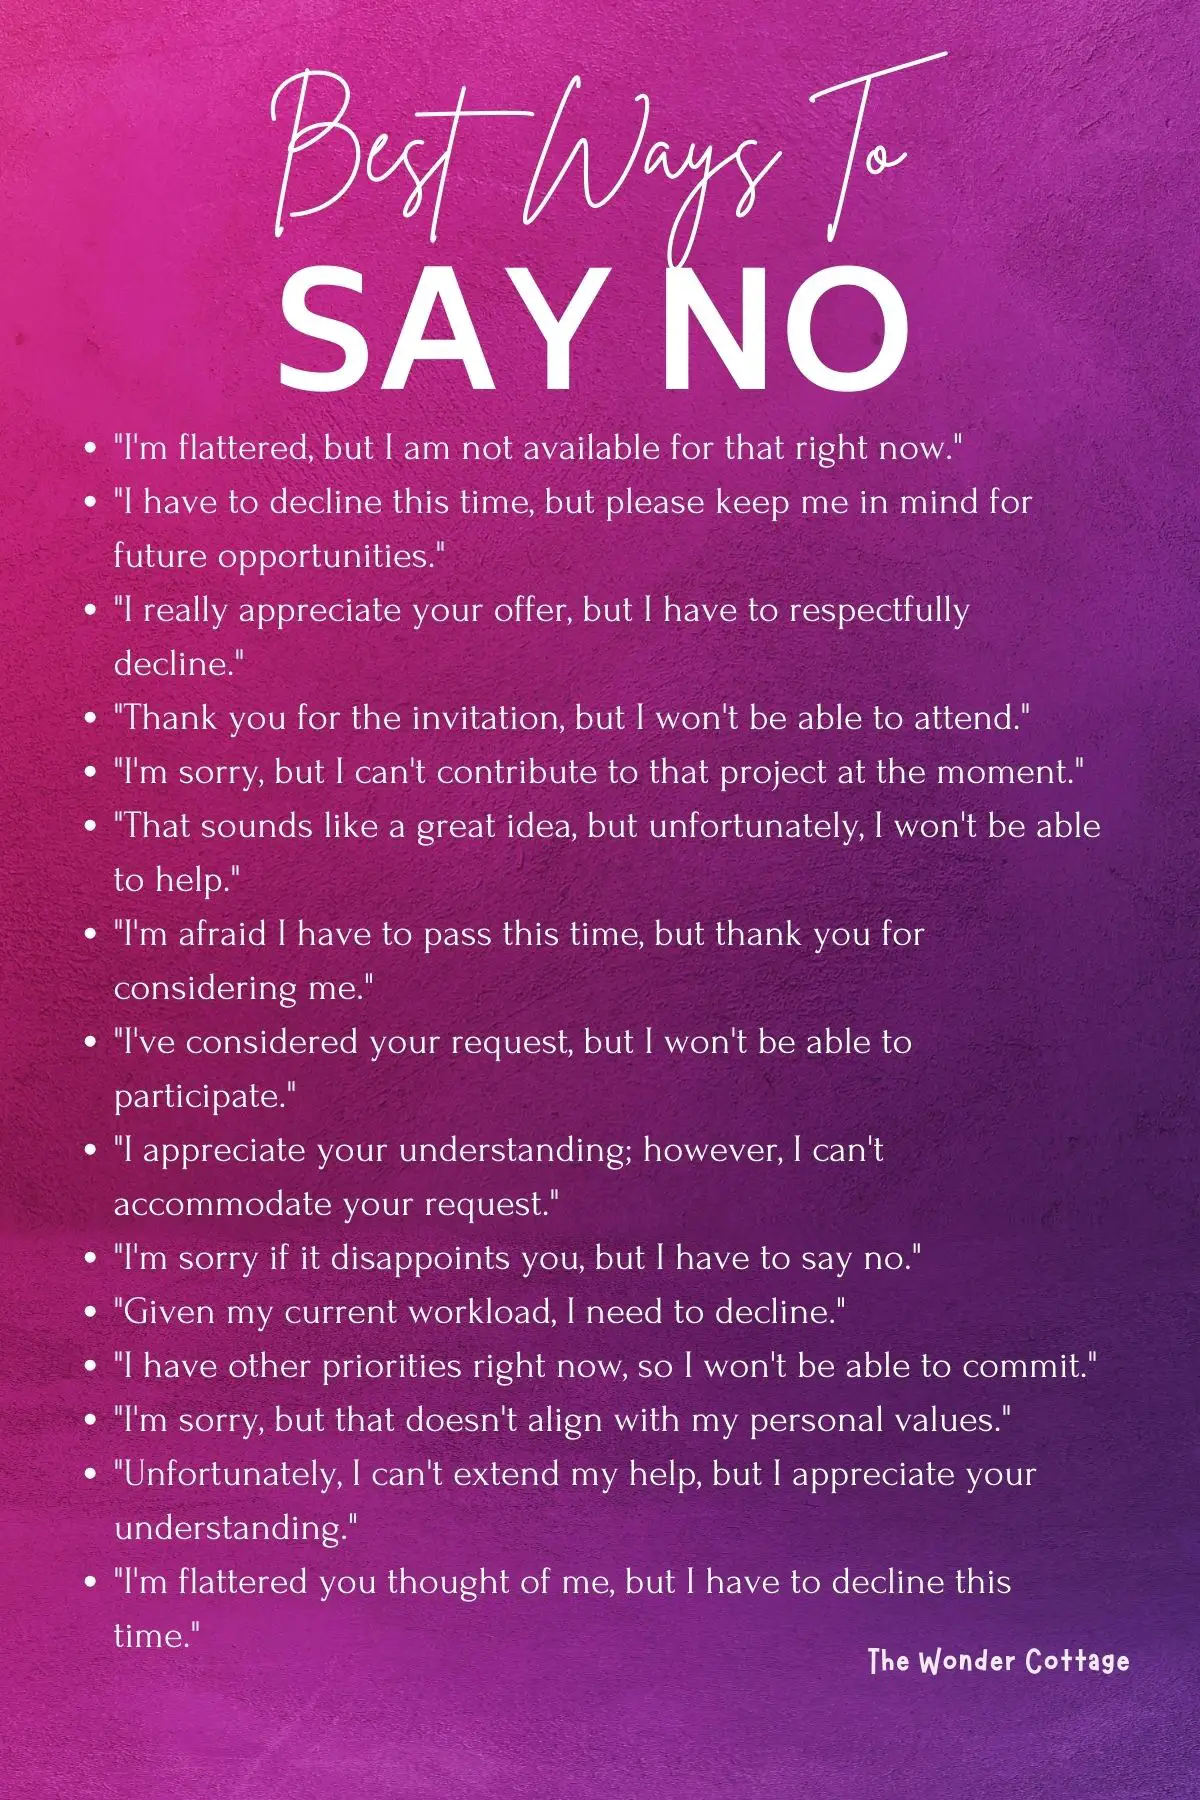 Best ways to say no